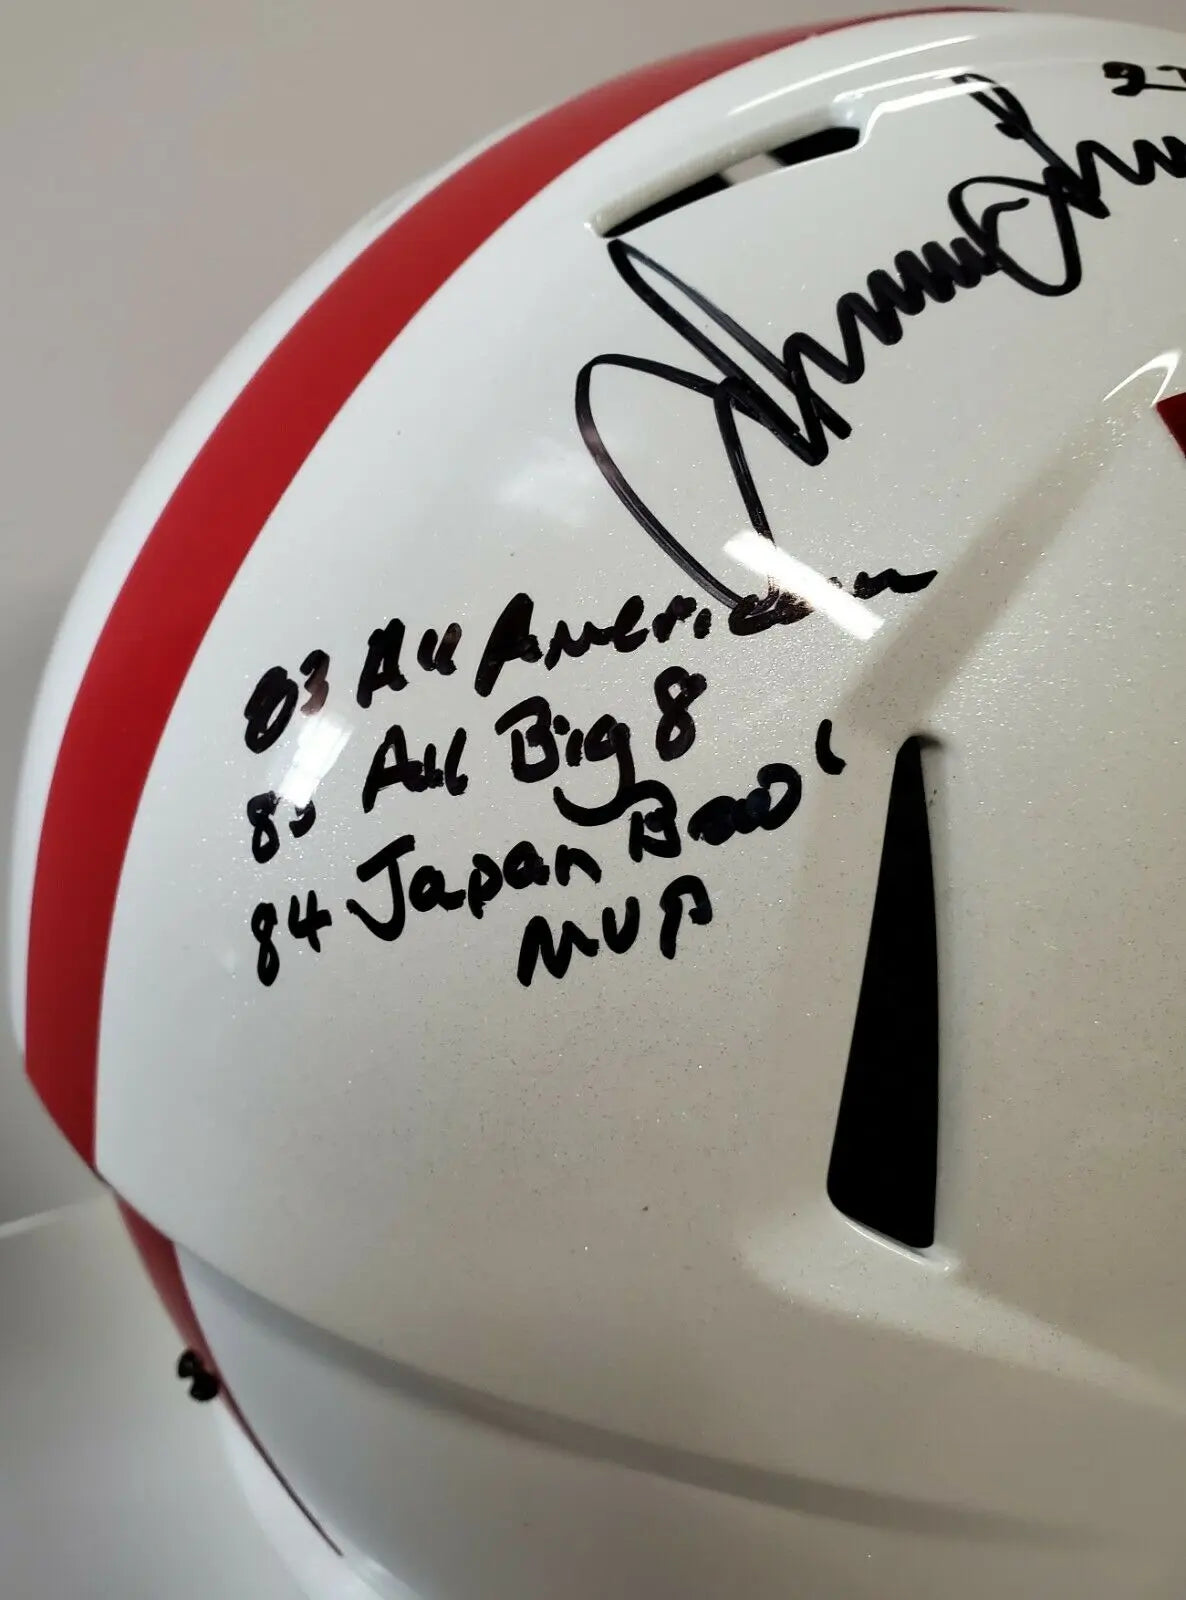 MVP Authentics Irving Fryar Autographed Signed Inscribed Nebraska Full Size Helmet Jsa Coa 287.10 sports jersey framing , jersey framing